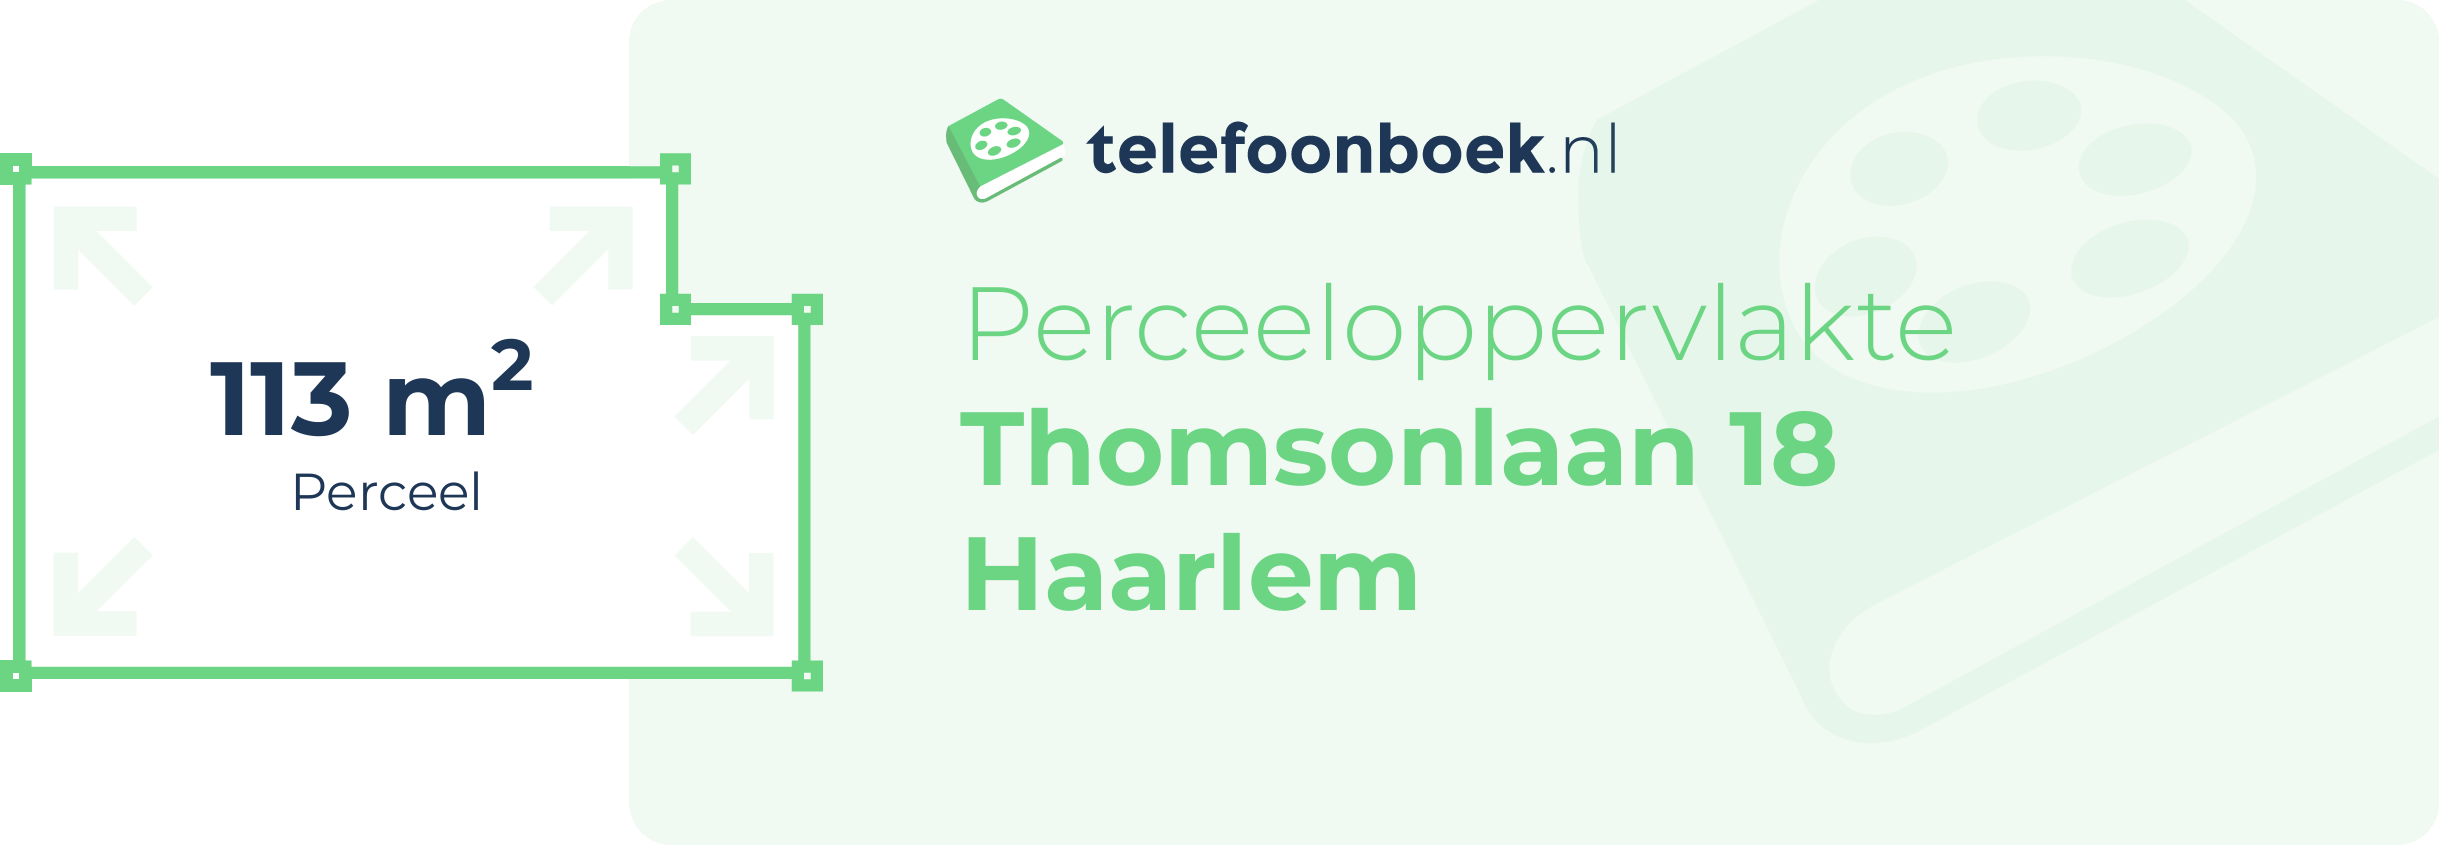 Perceeloppervlakte Thomsonlaan 18 Haarlem